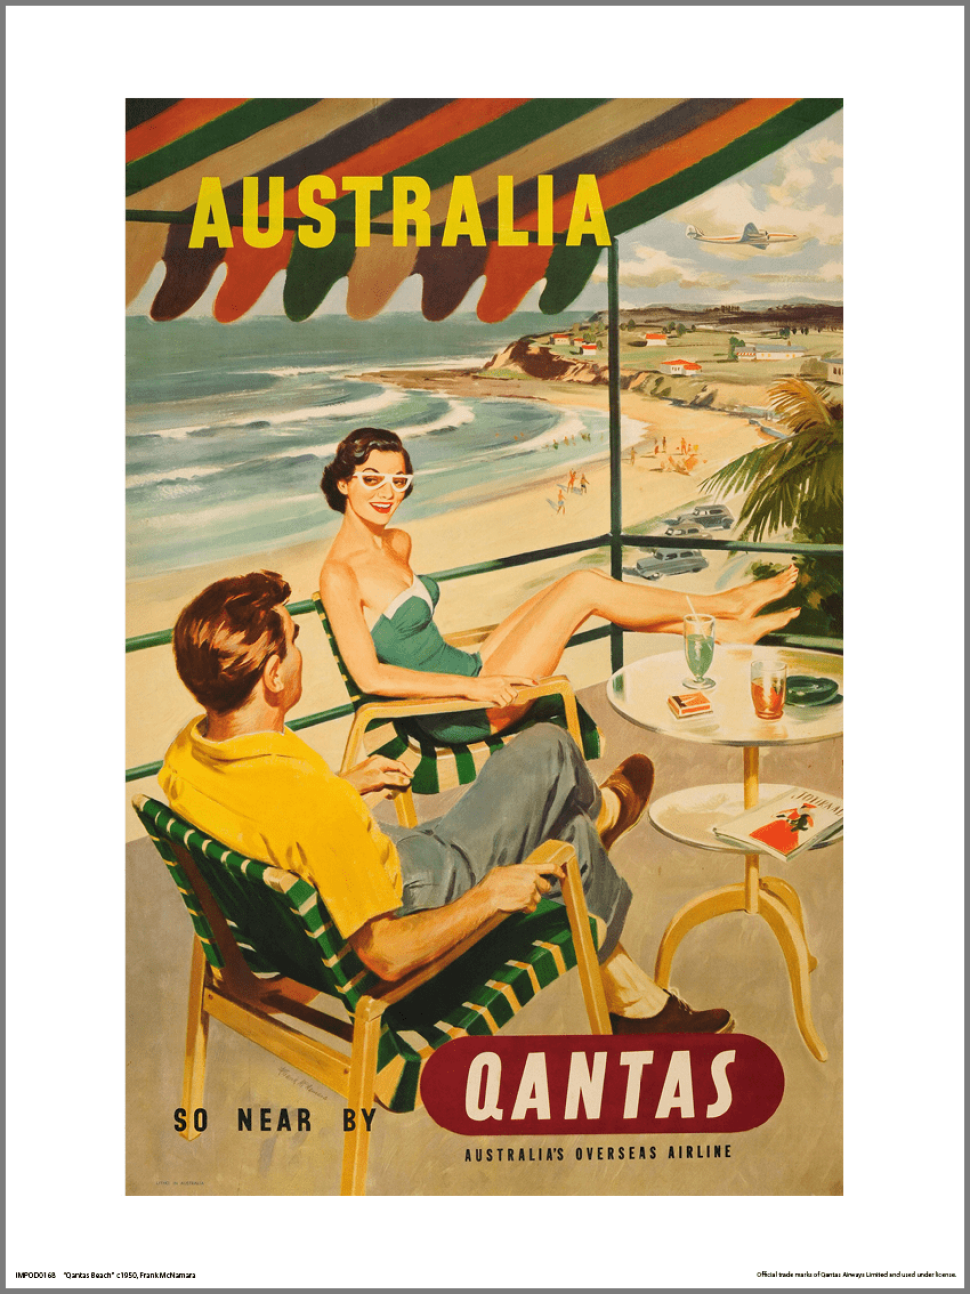 Qantas travel poster, designed by Frank McNamara, courtesy Qantas Airways Ltd